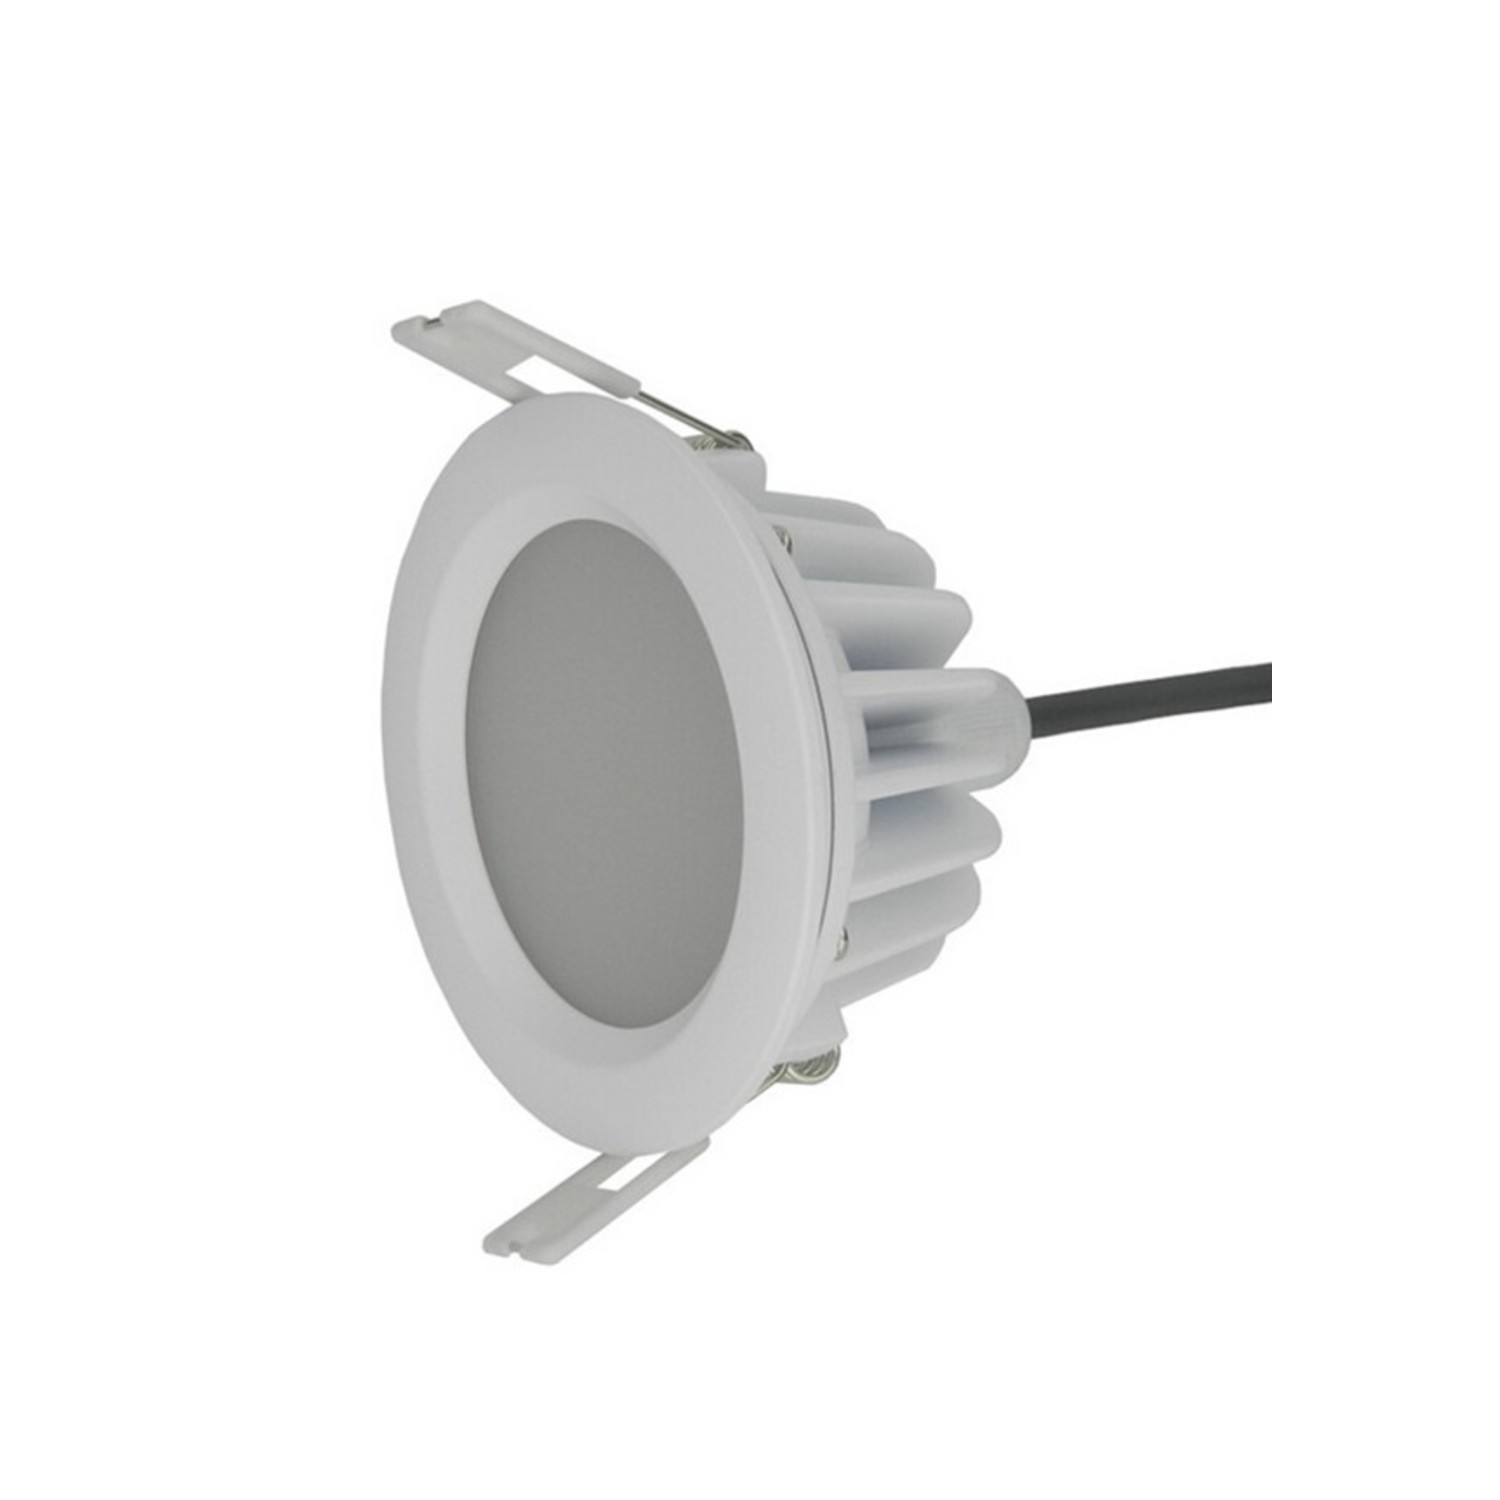 LED inbouwspot badkamer IP65 12W zaagmaat Leddepot.be